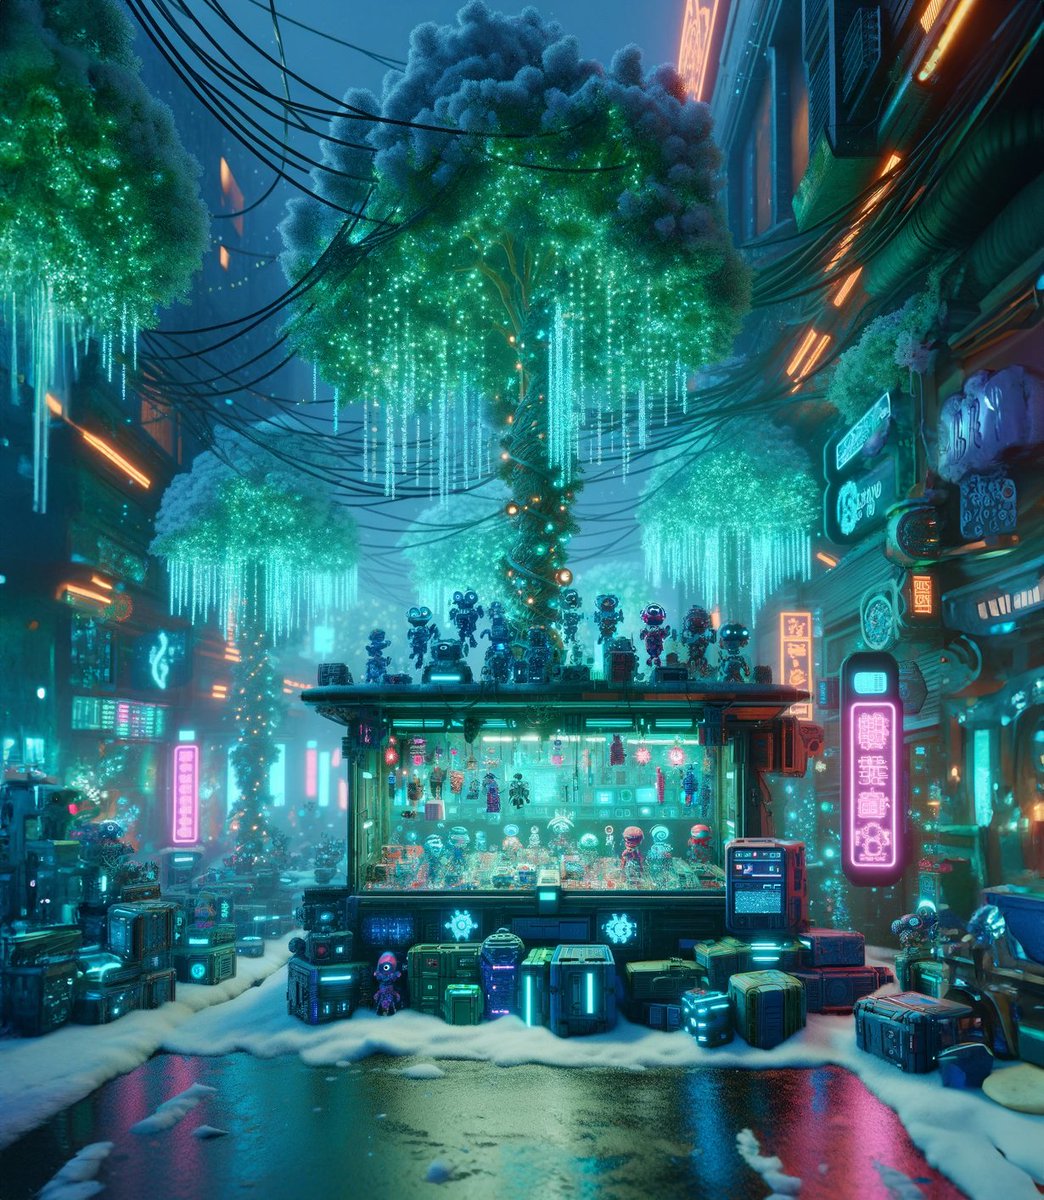 Neonpunk Market

by @AethericaArt